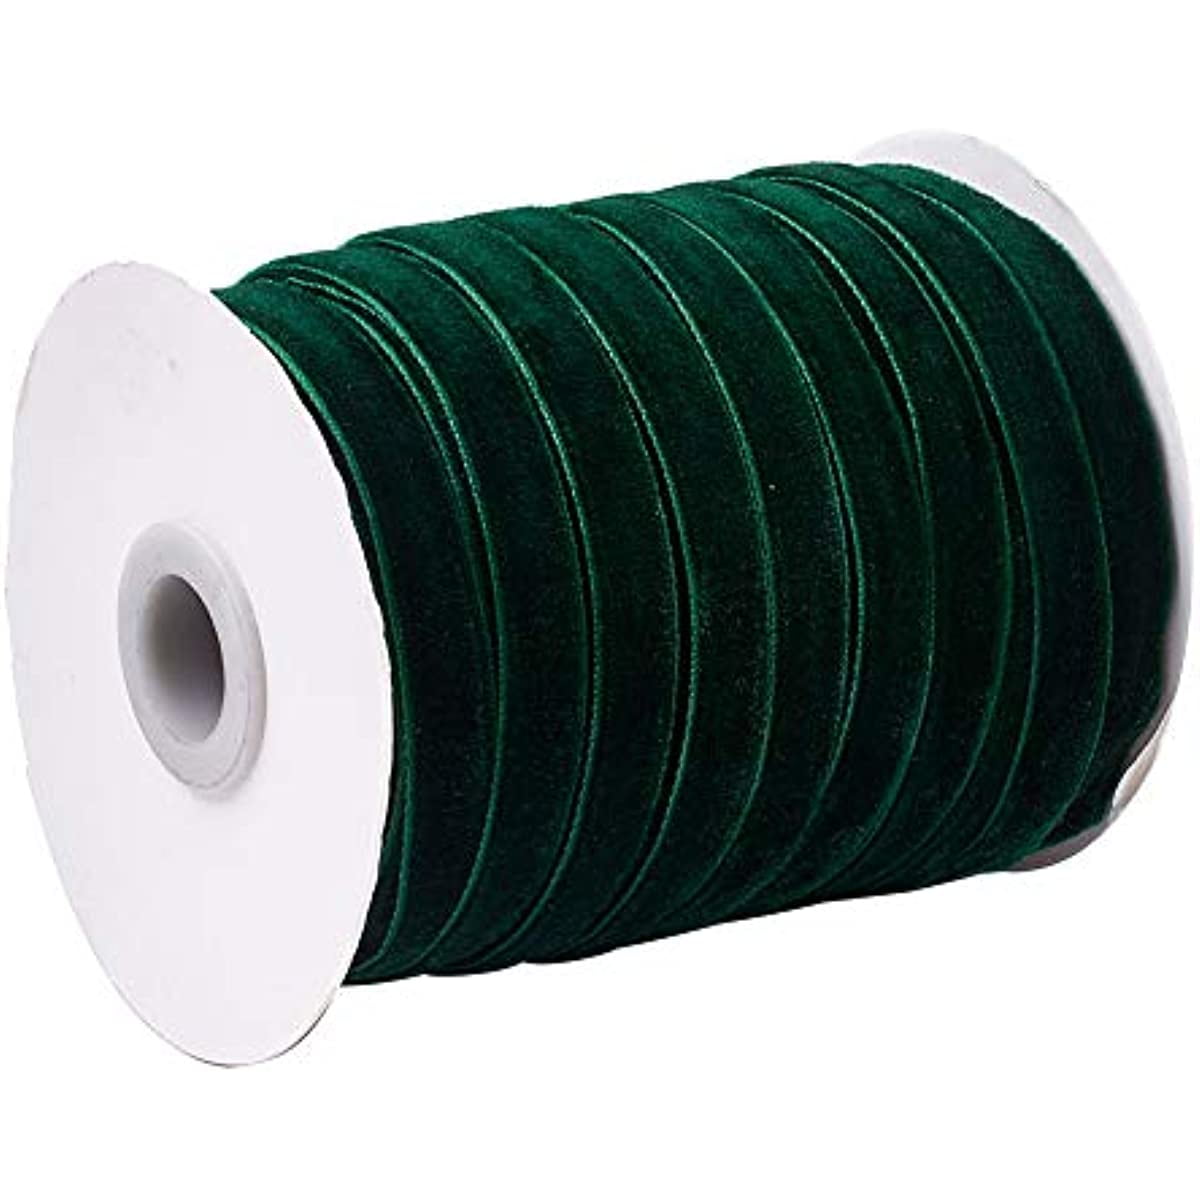 BokingOne Dark Green Velvet Ribbon 1 Inch X 30 Yds Wide Vintage Nylon  Velvet Wired Ribbon with Spool for Gift Wrapping Wedding Decorations Home  Decor